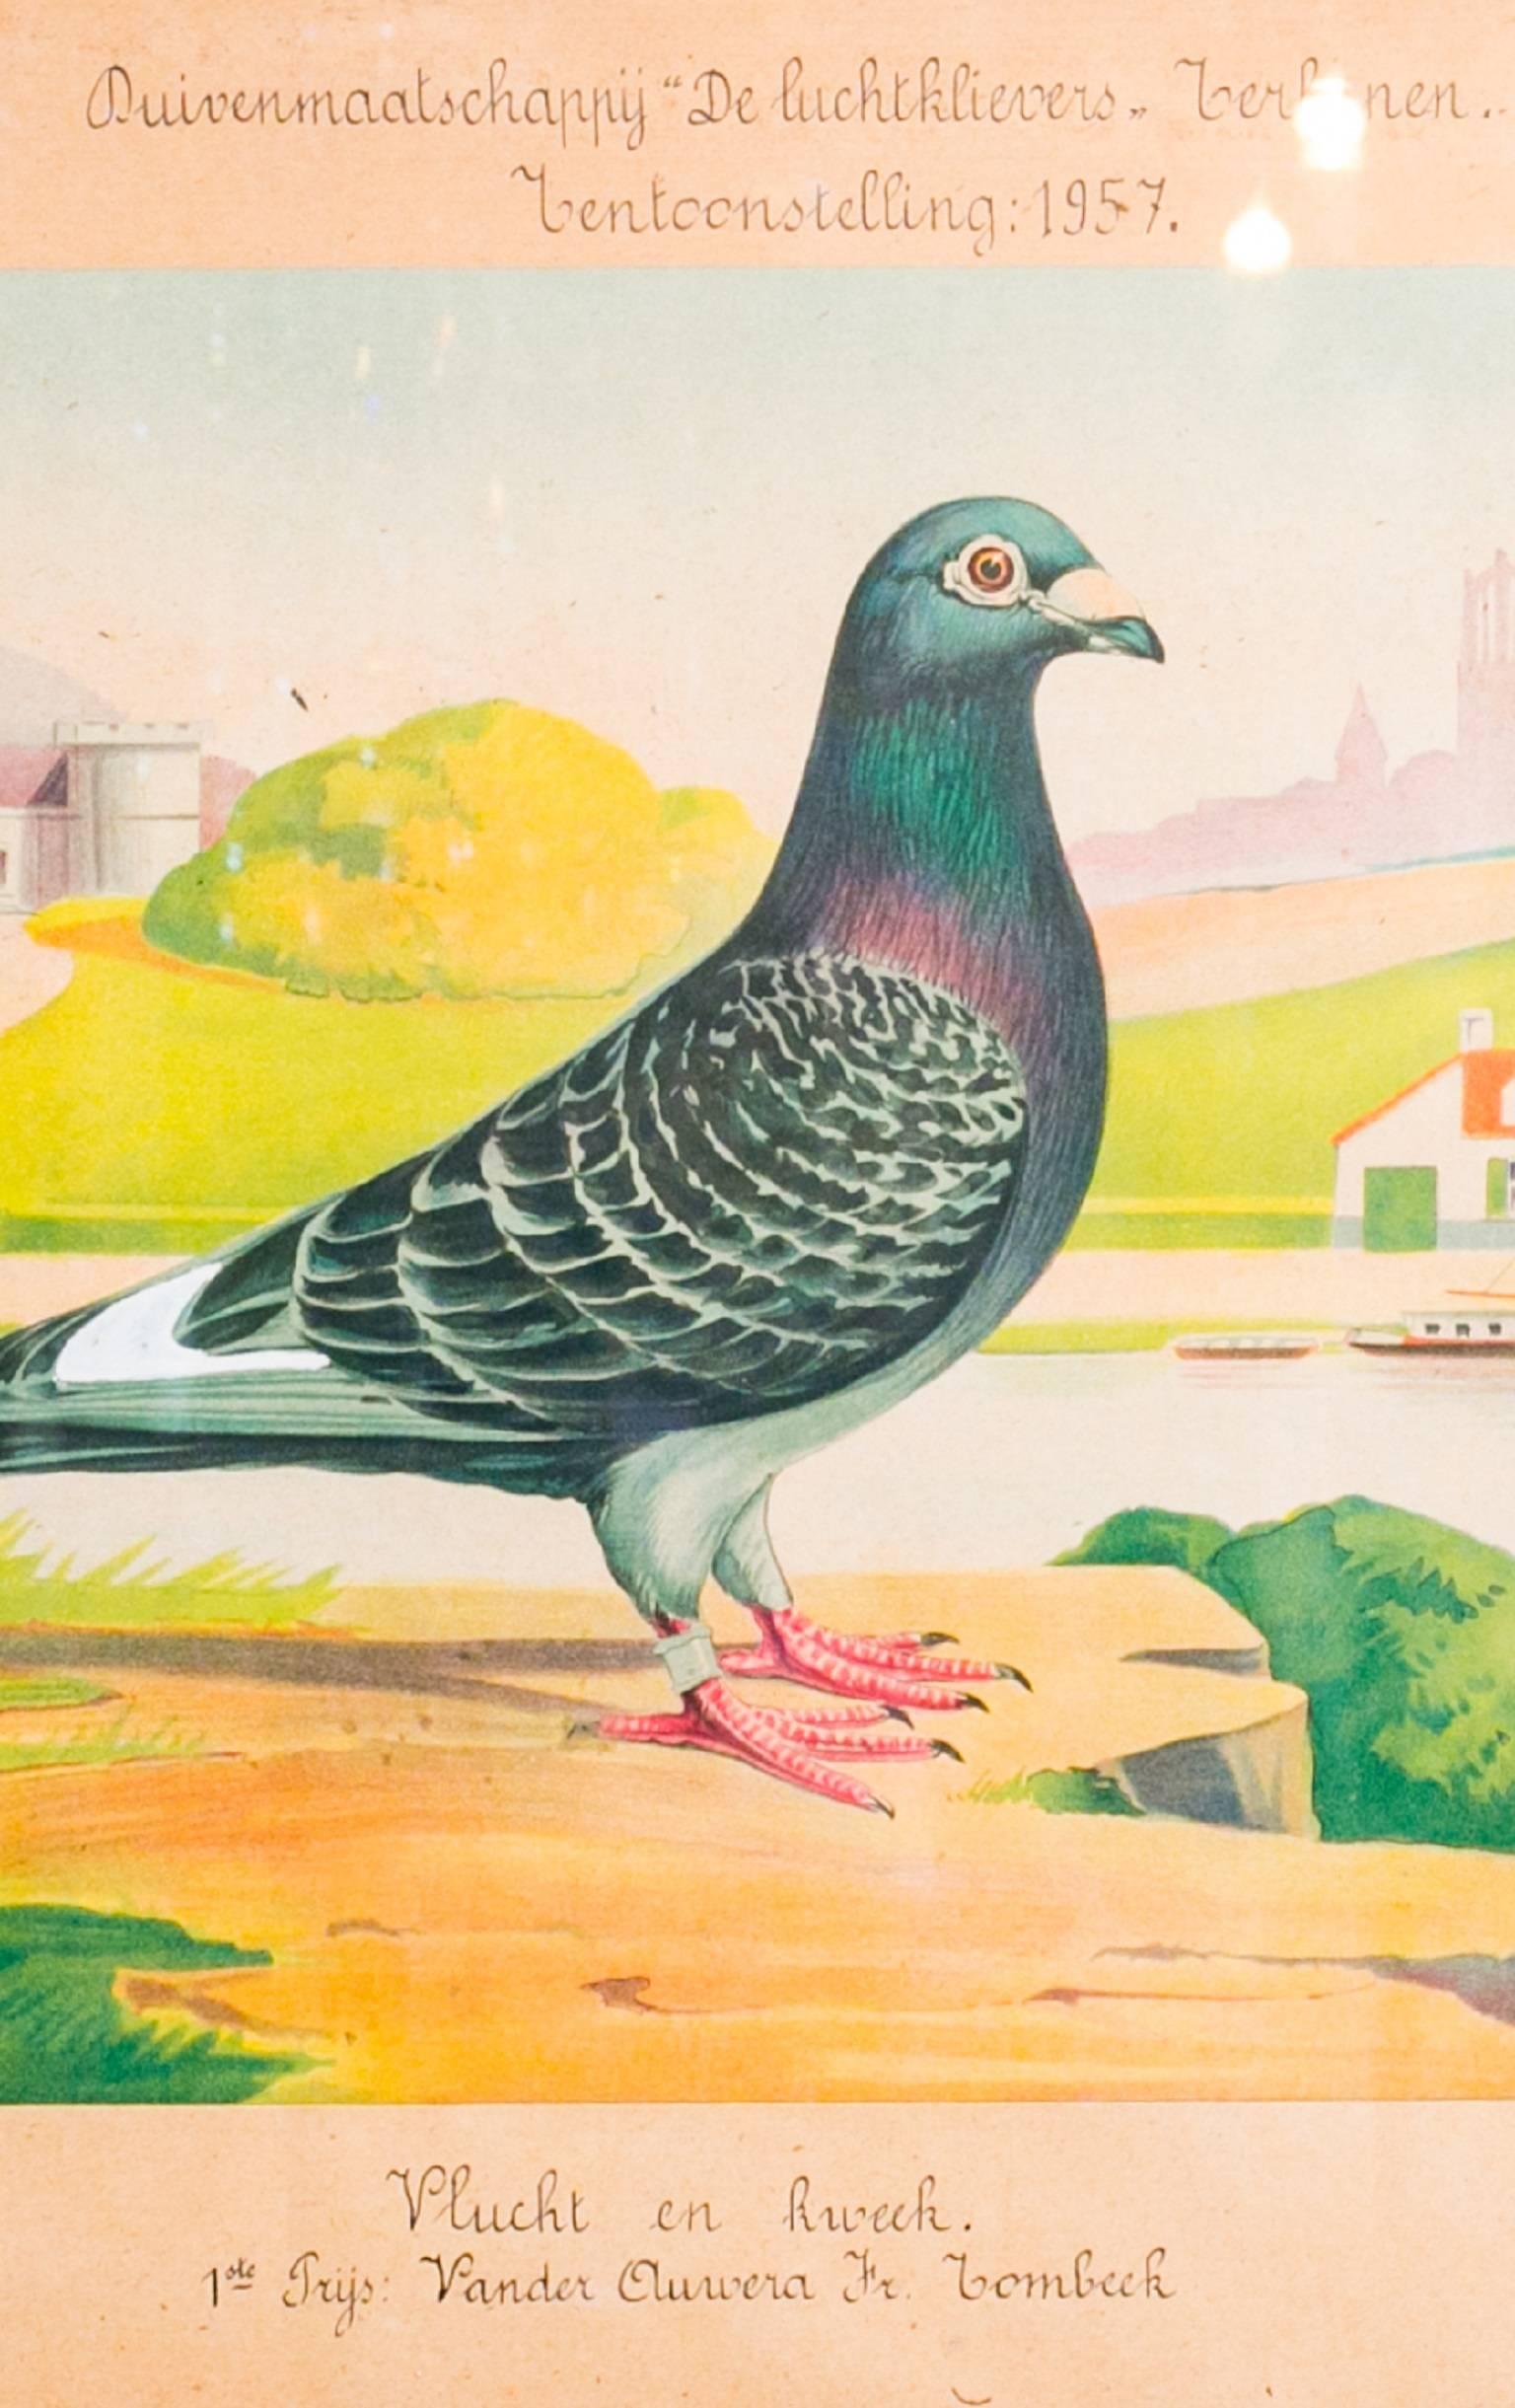 Collection of Vintage Framed Belgian Pigeon Championship Diplomas  1